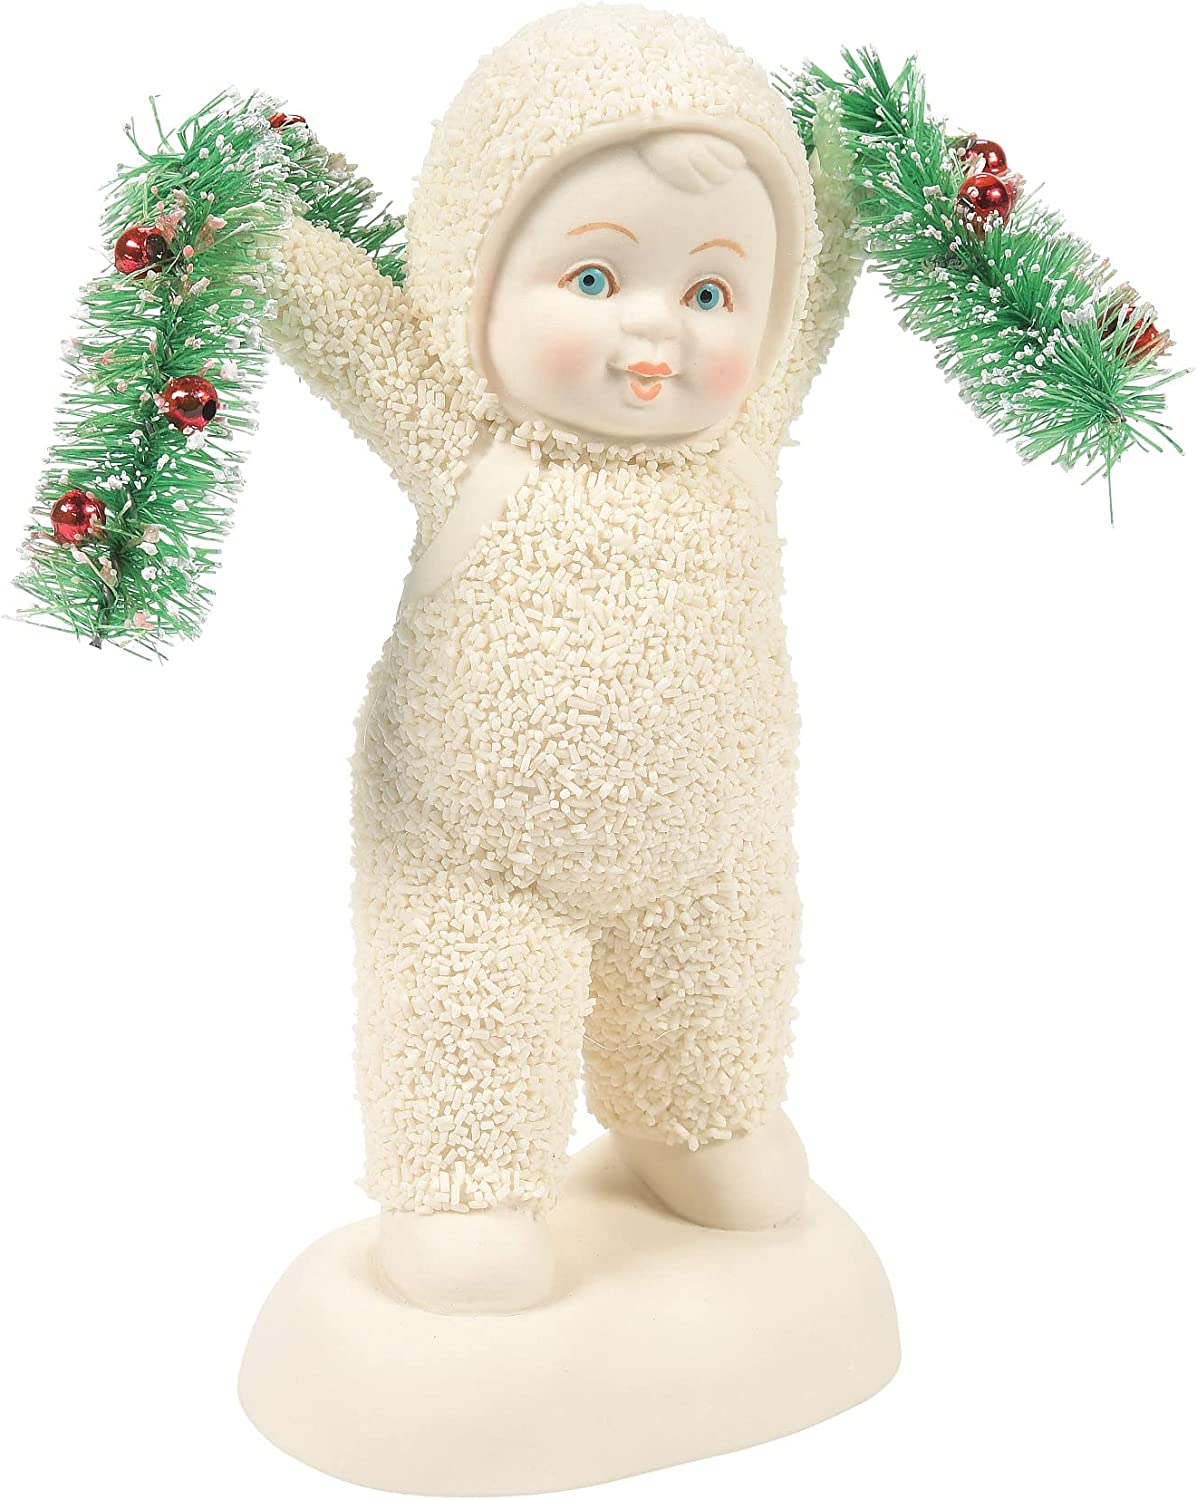 Department 56 Snowbabies Christmas Memories Garland Figurine